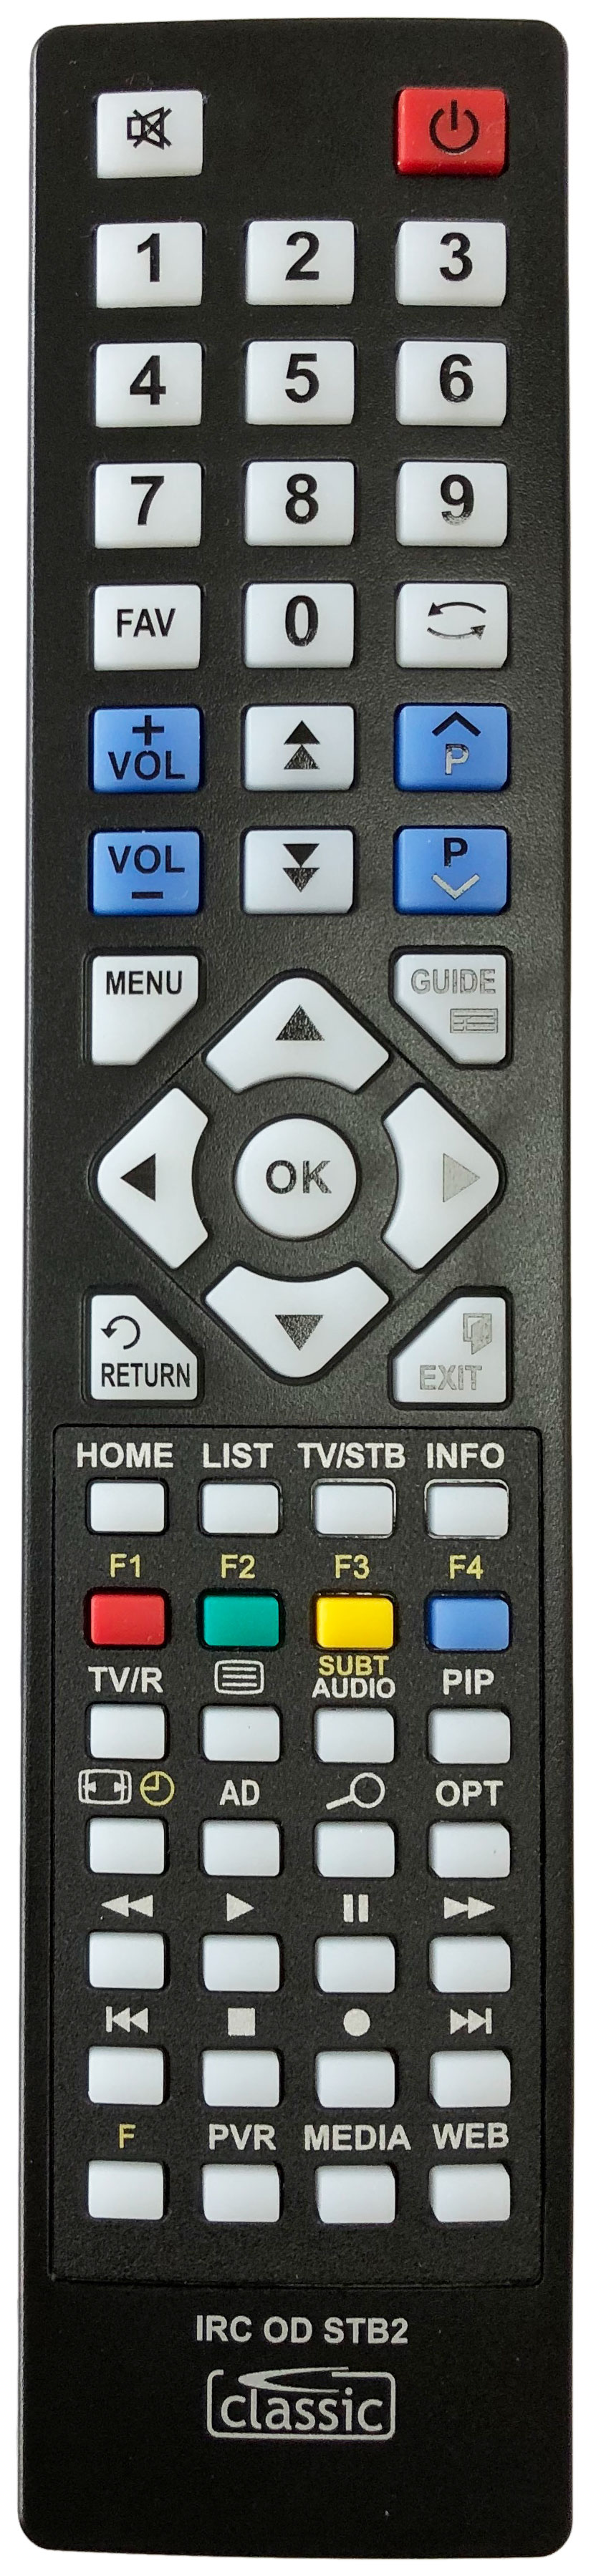 TECHNIKA DTRHD320AW11 Remote Control